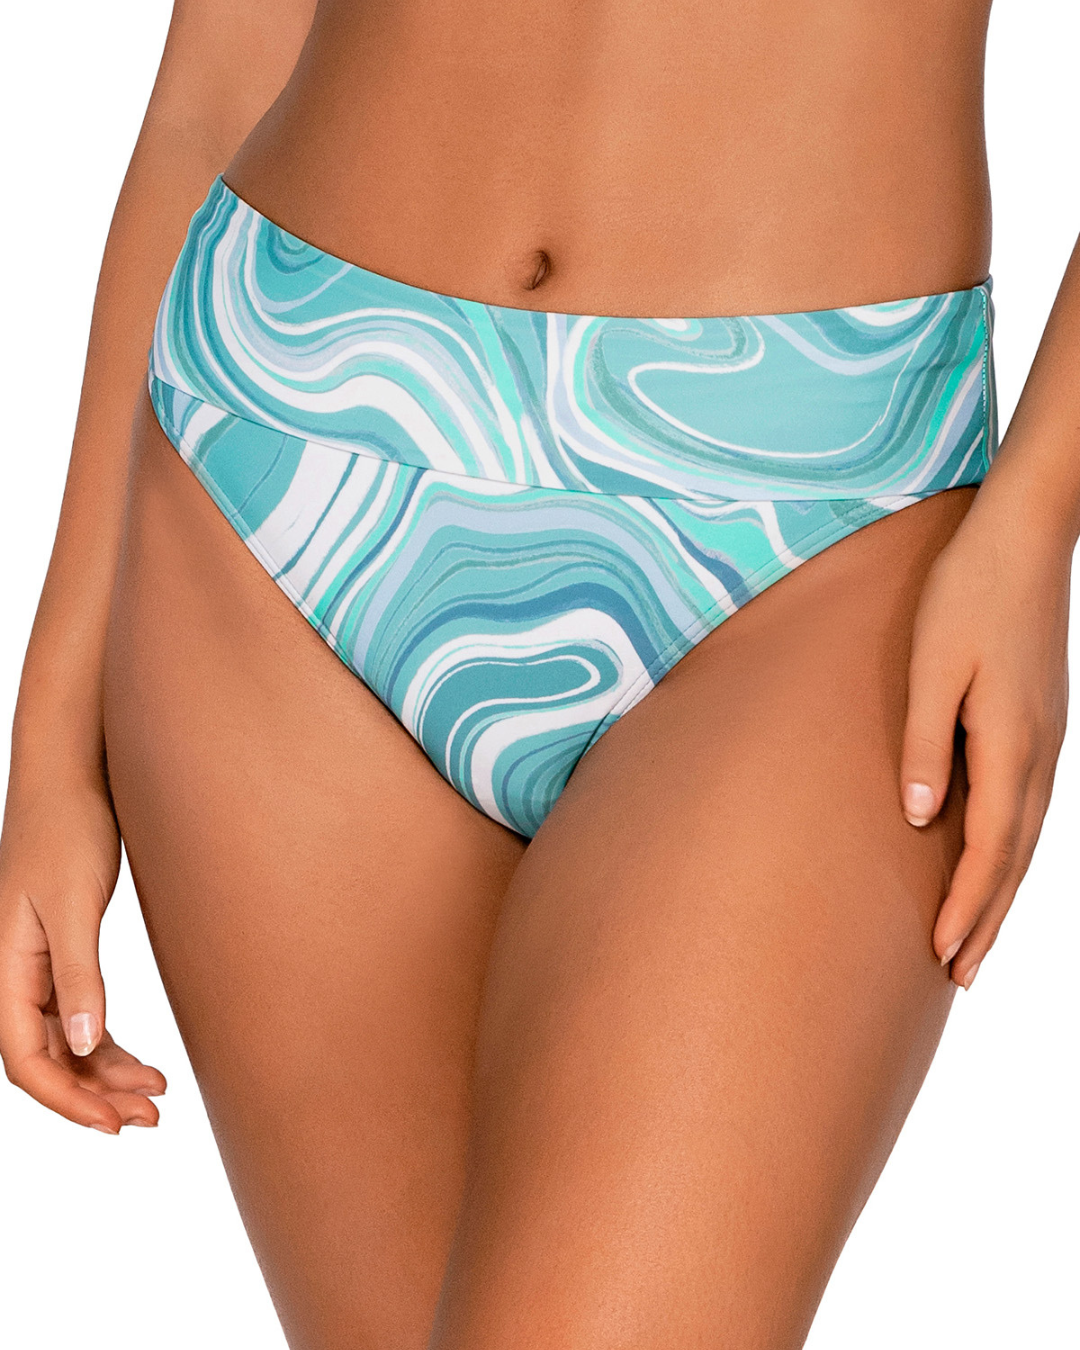 Model wearing a high waist fold over bikini bottom in a pale turquoise and white swirl print.